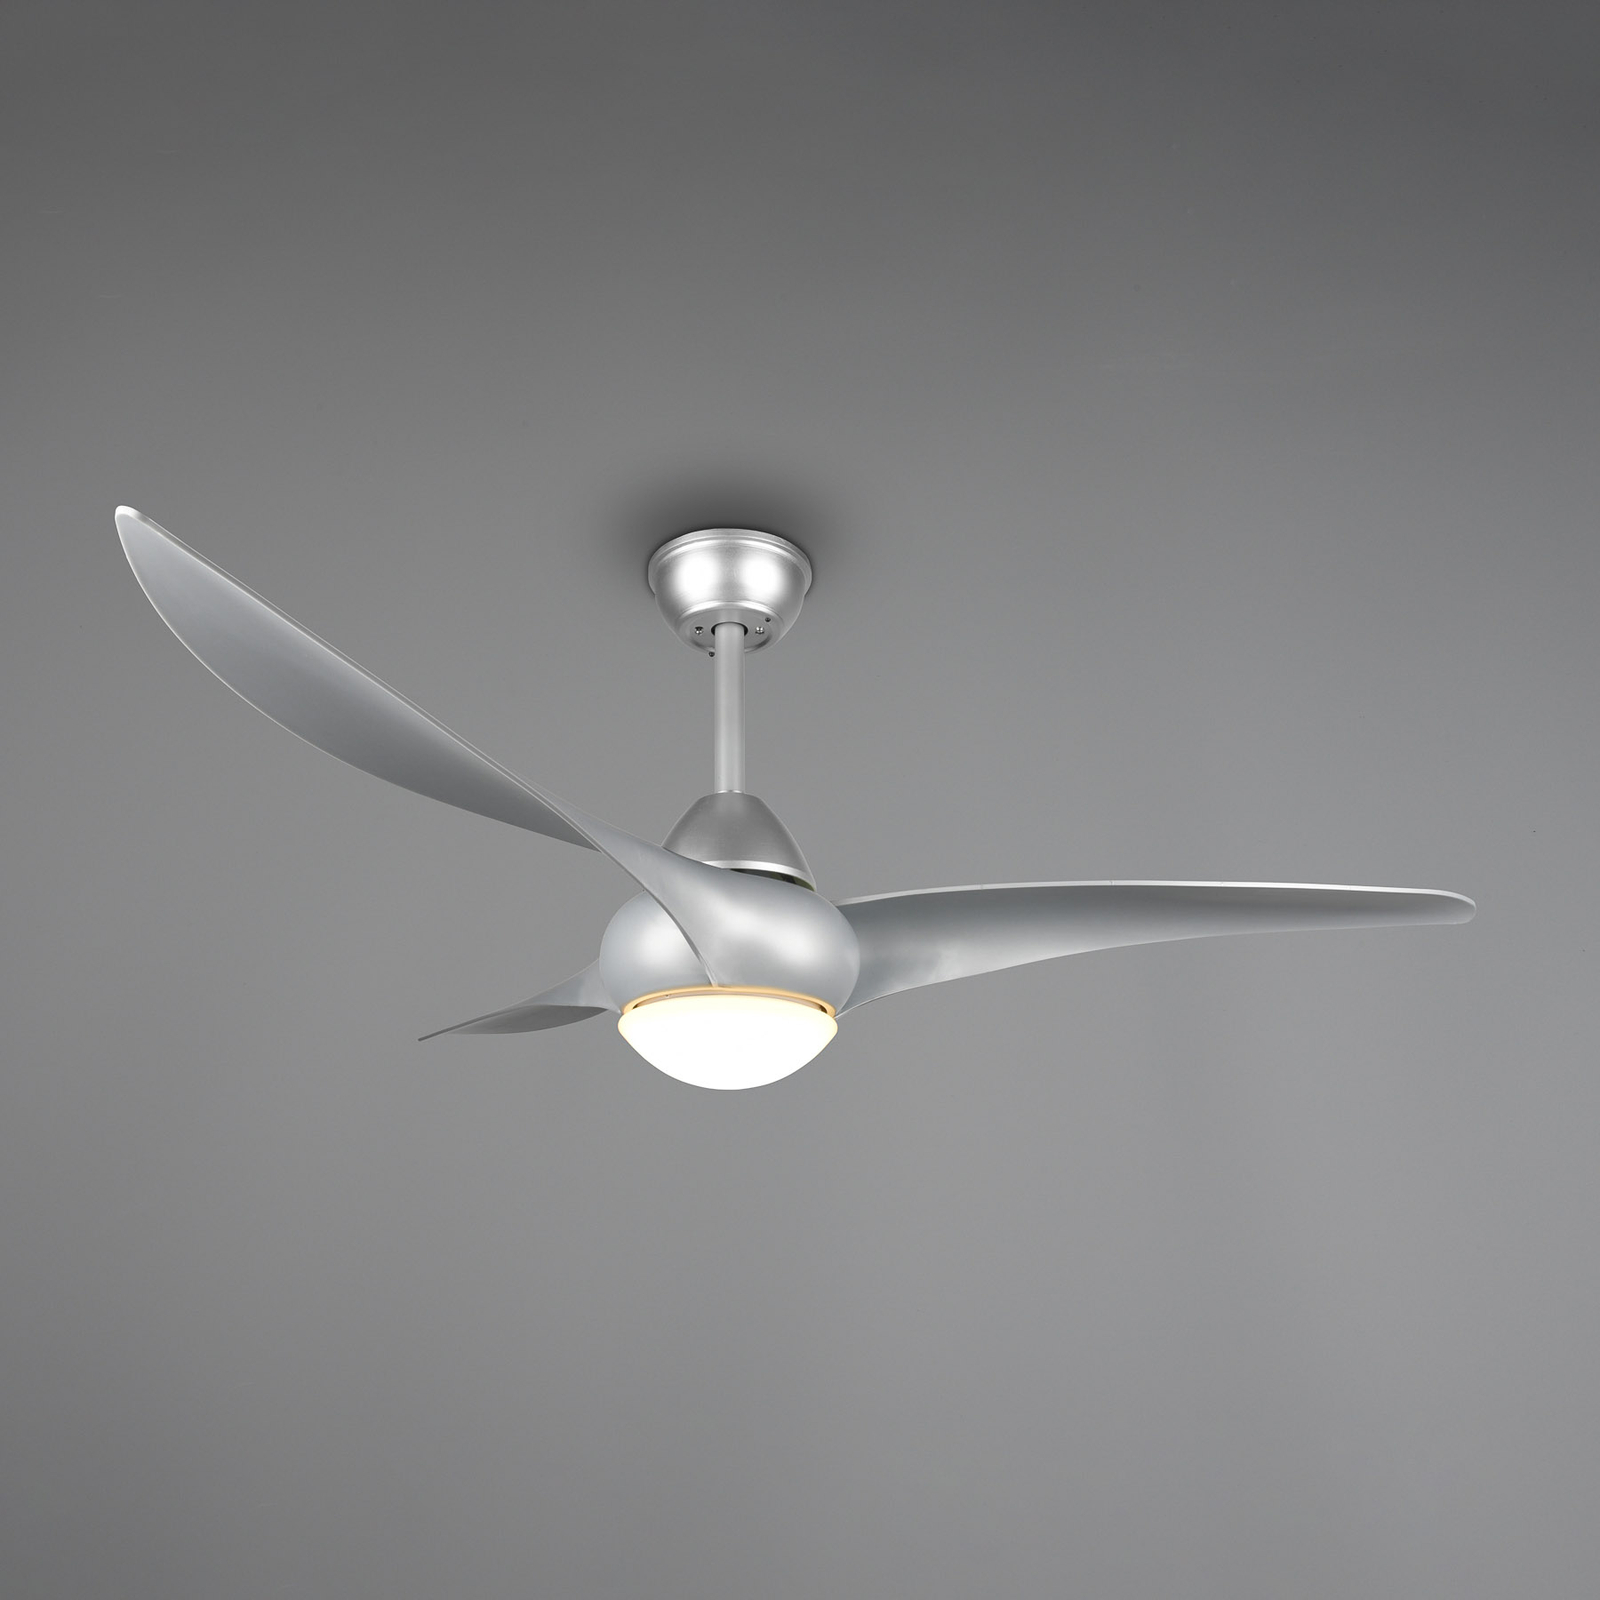 Alesund LED fan with a remote control, titanium